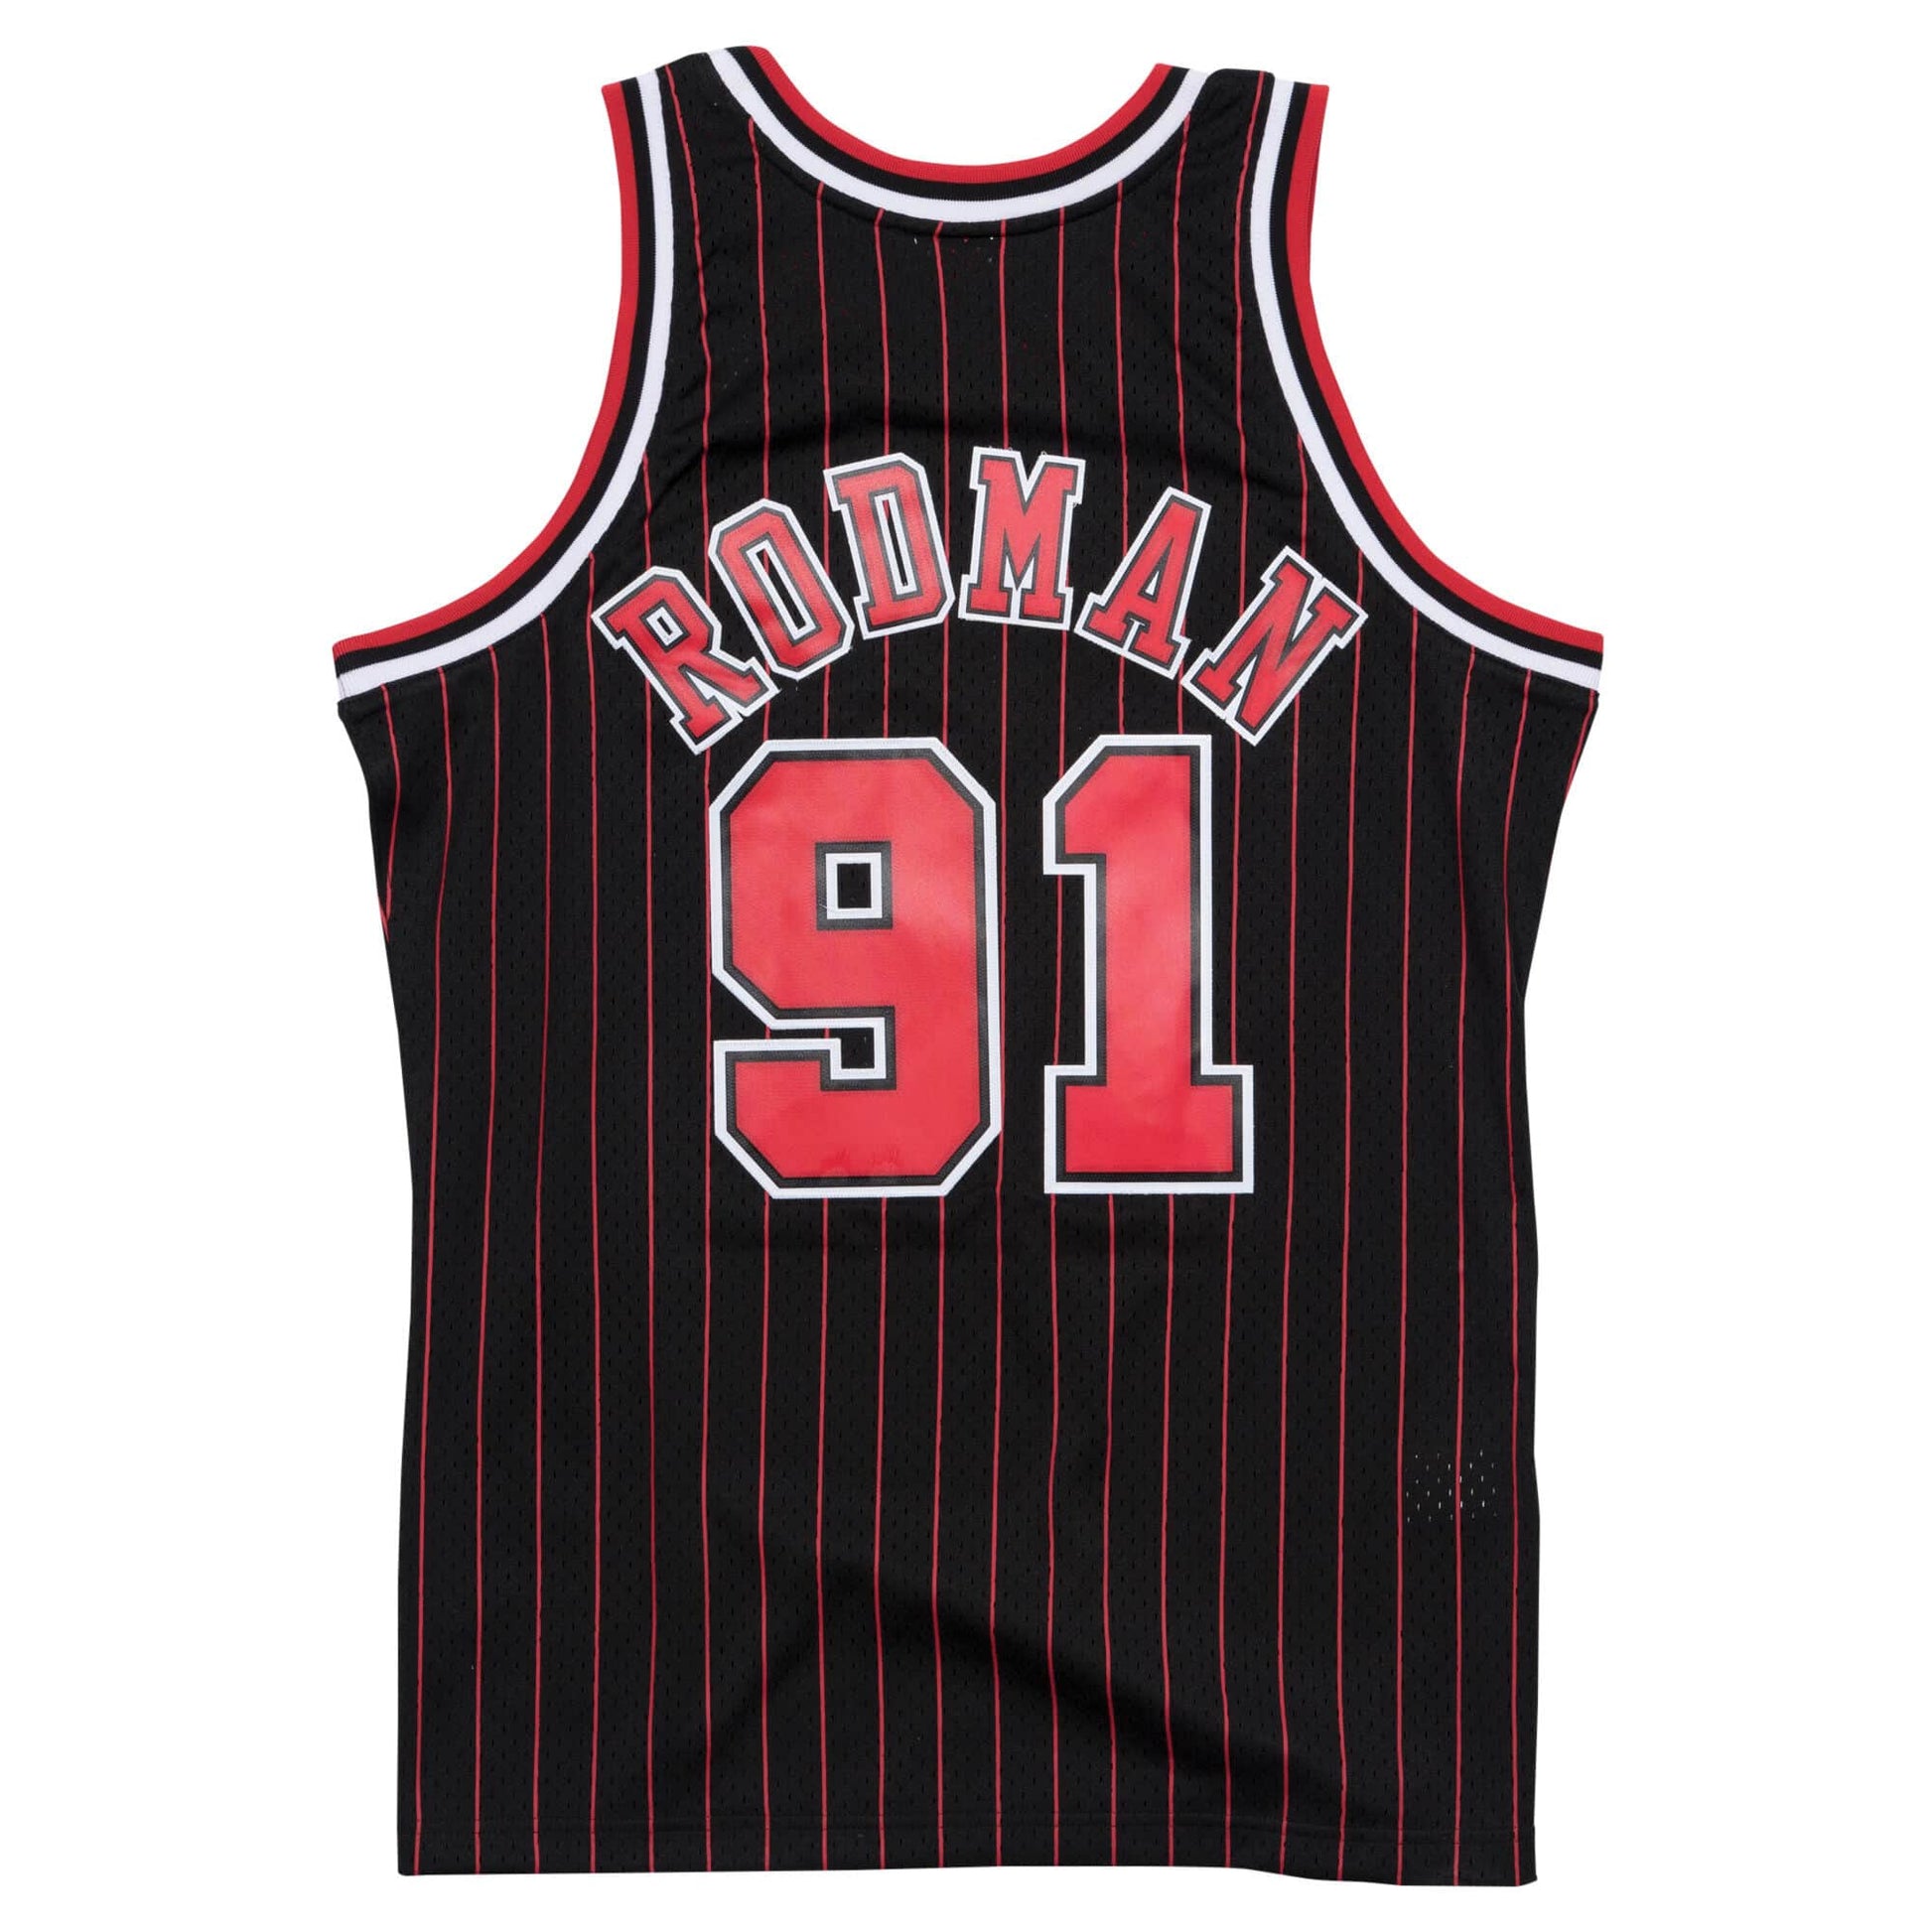 Dennis Rodman Jerseys, Dennis Rodman Shirts, Basketball Apparel